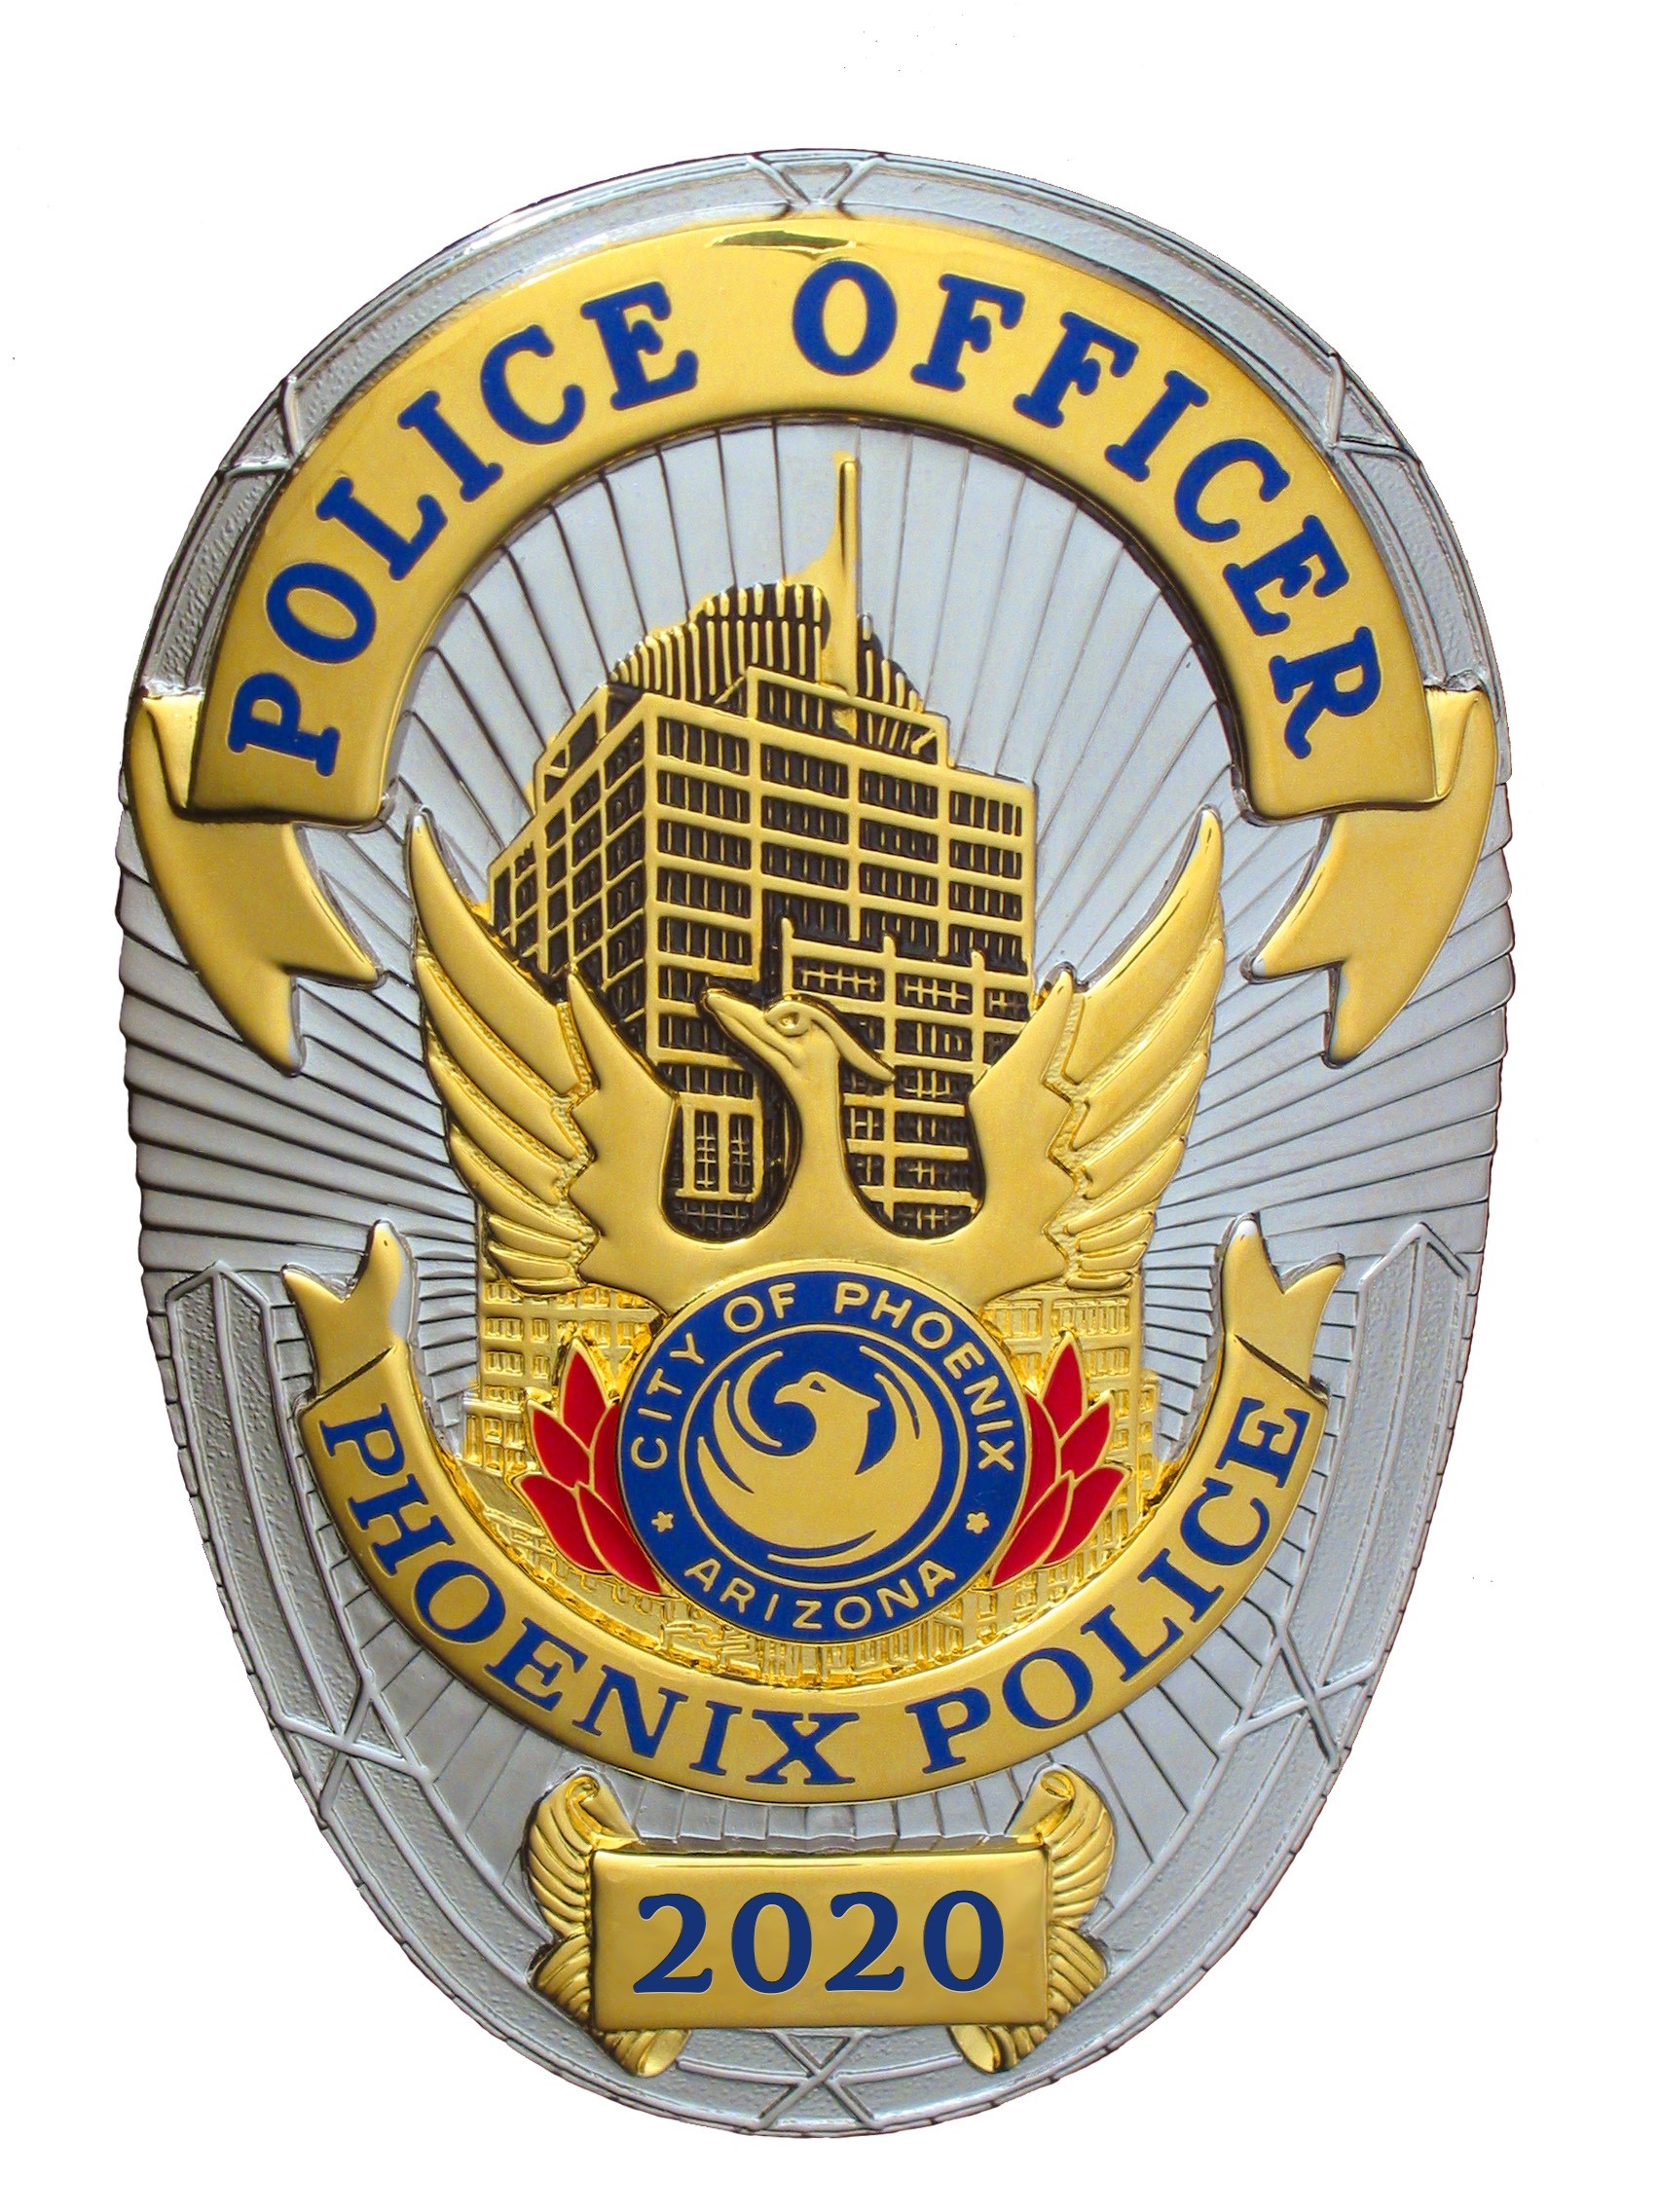 police-phoenix-police-recruiting